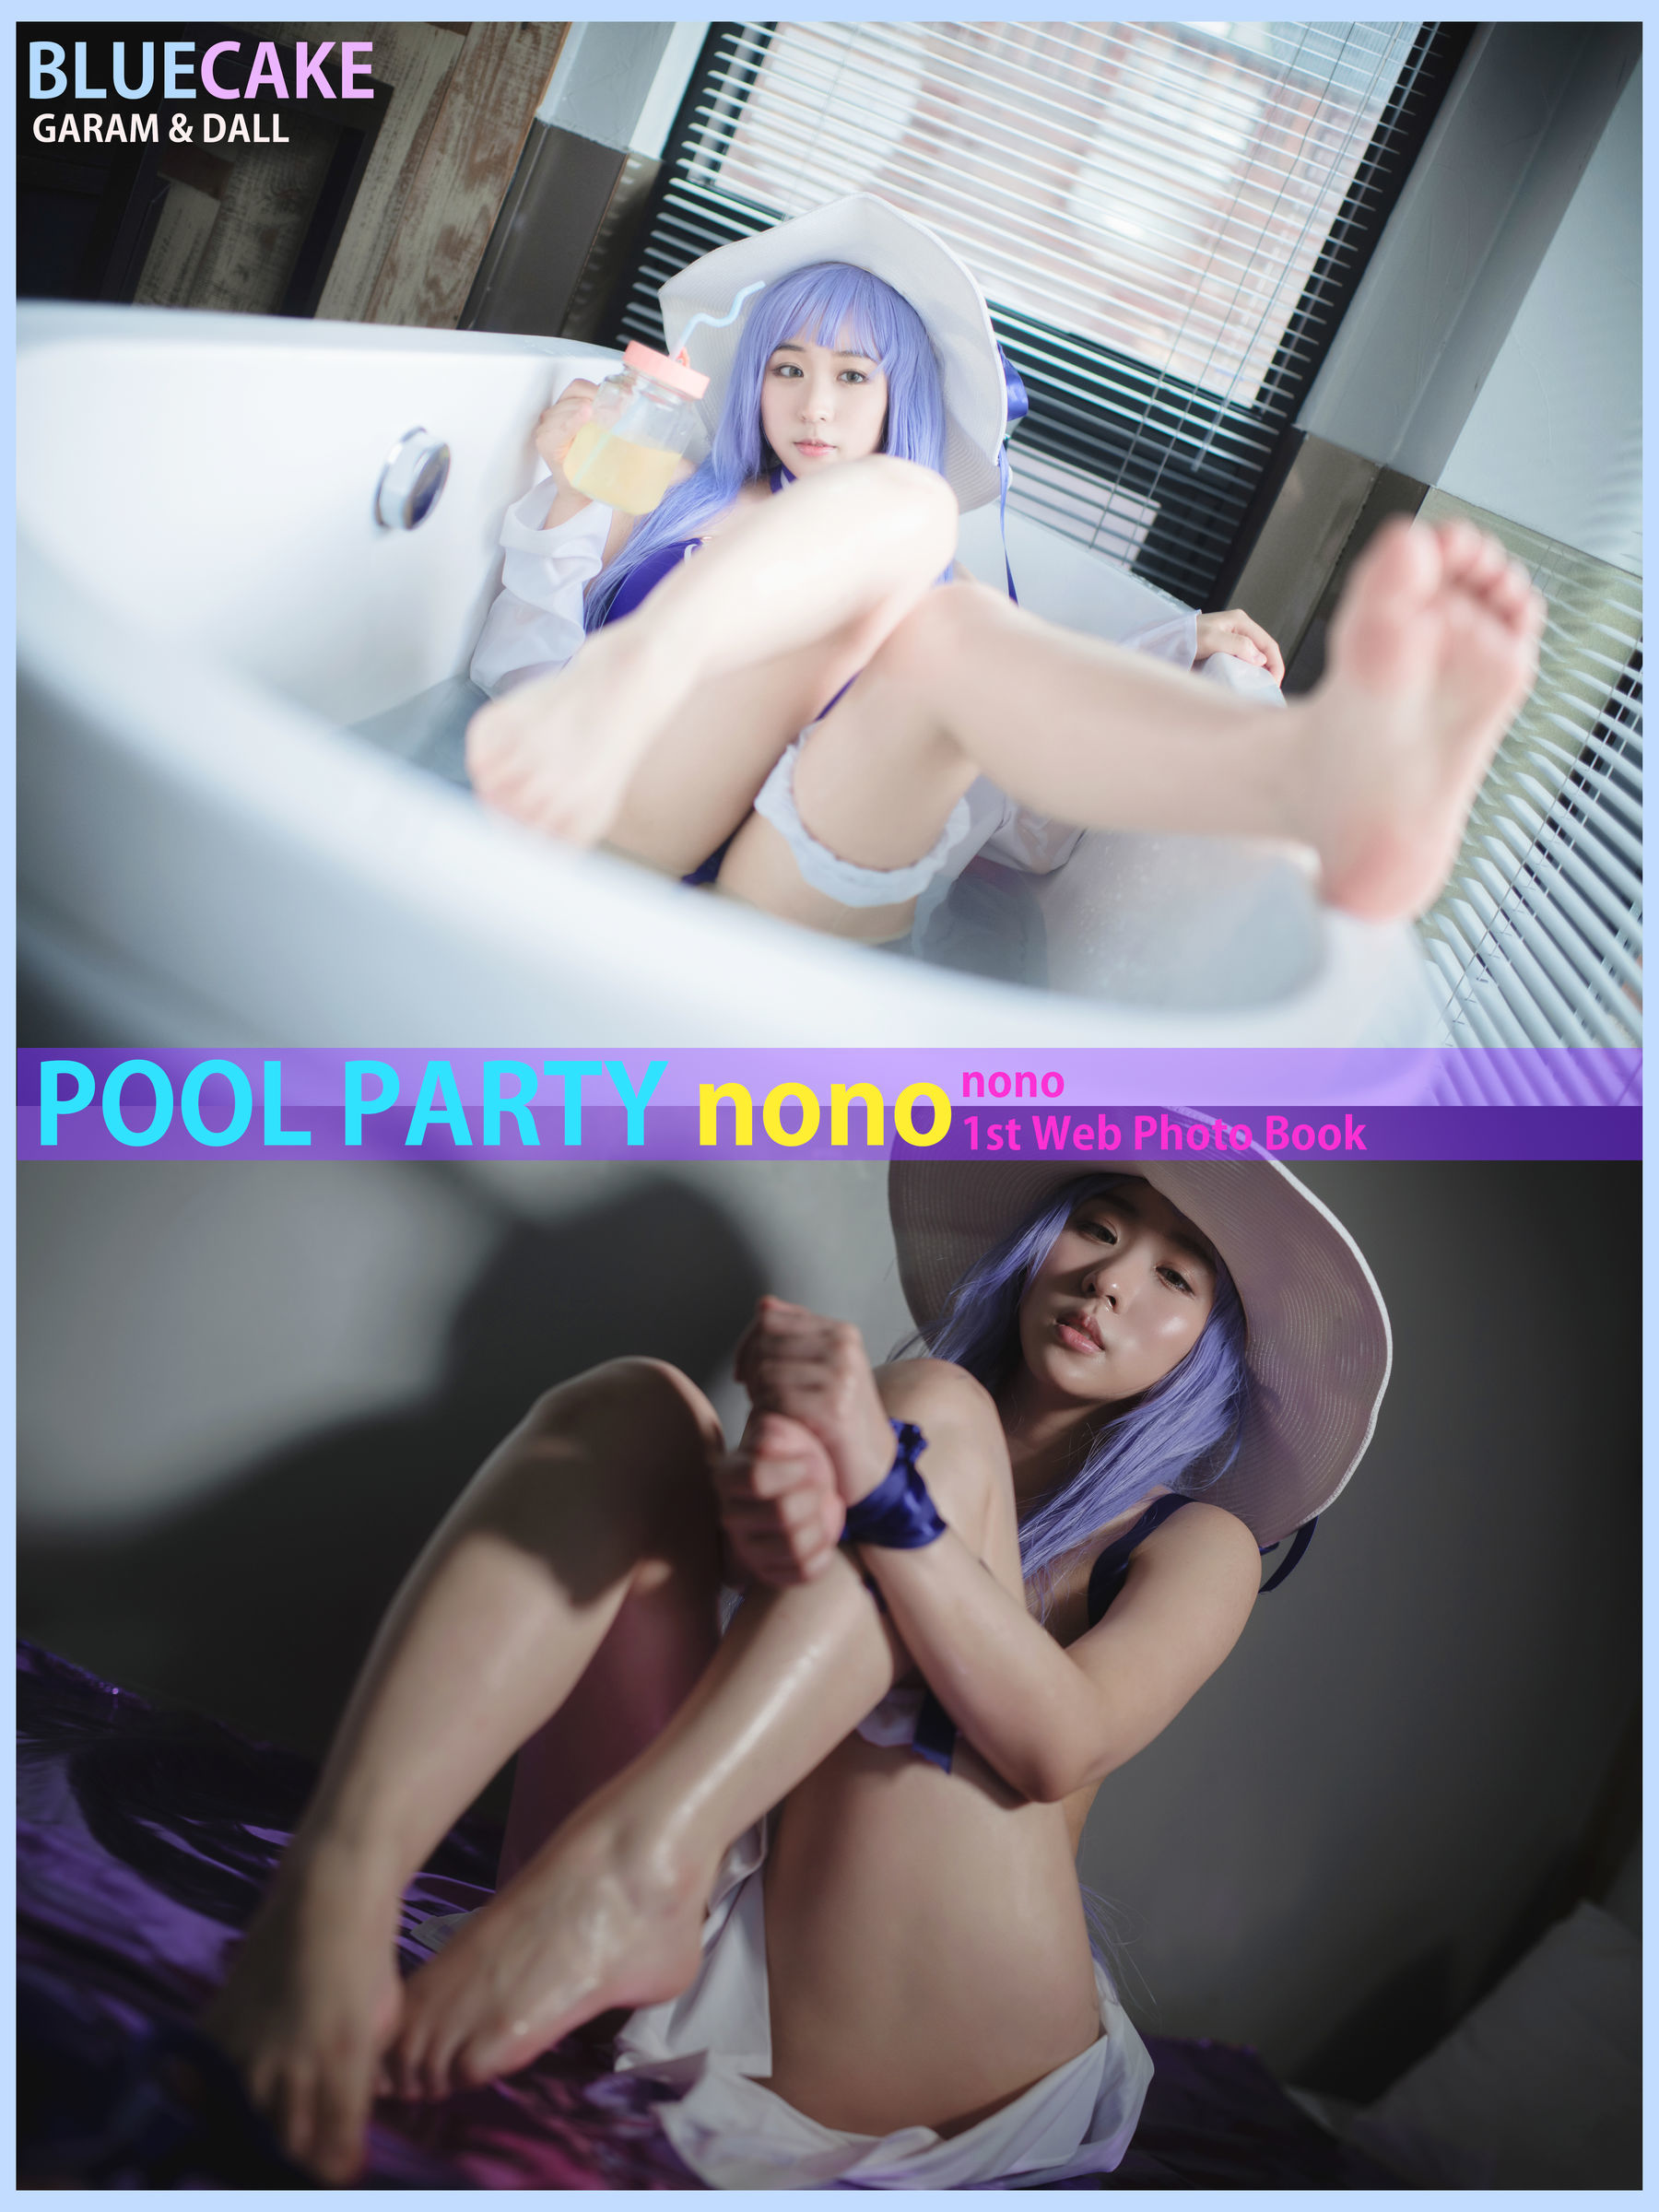 [BLUECAKE] Nono - Pool Party Caitlyn 1